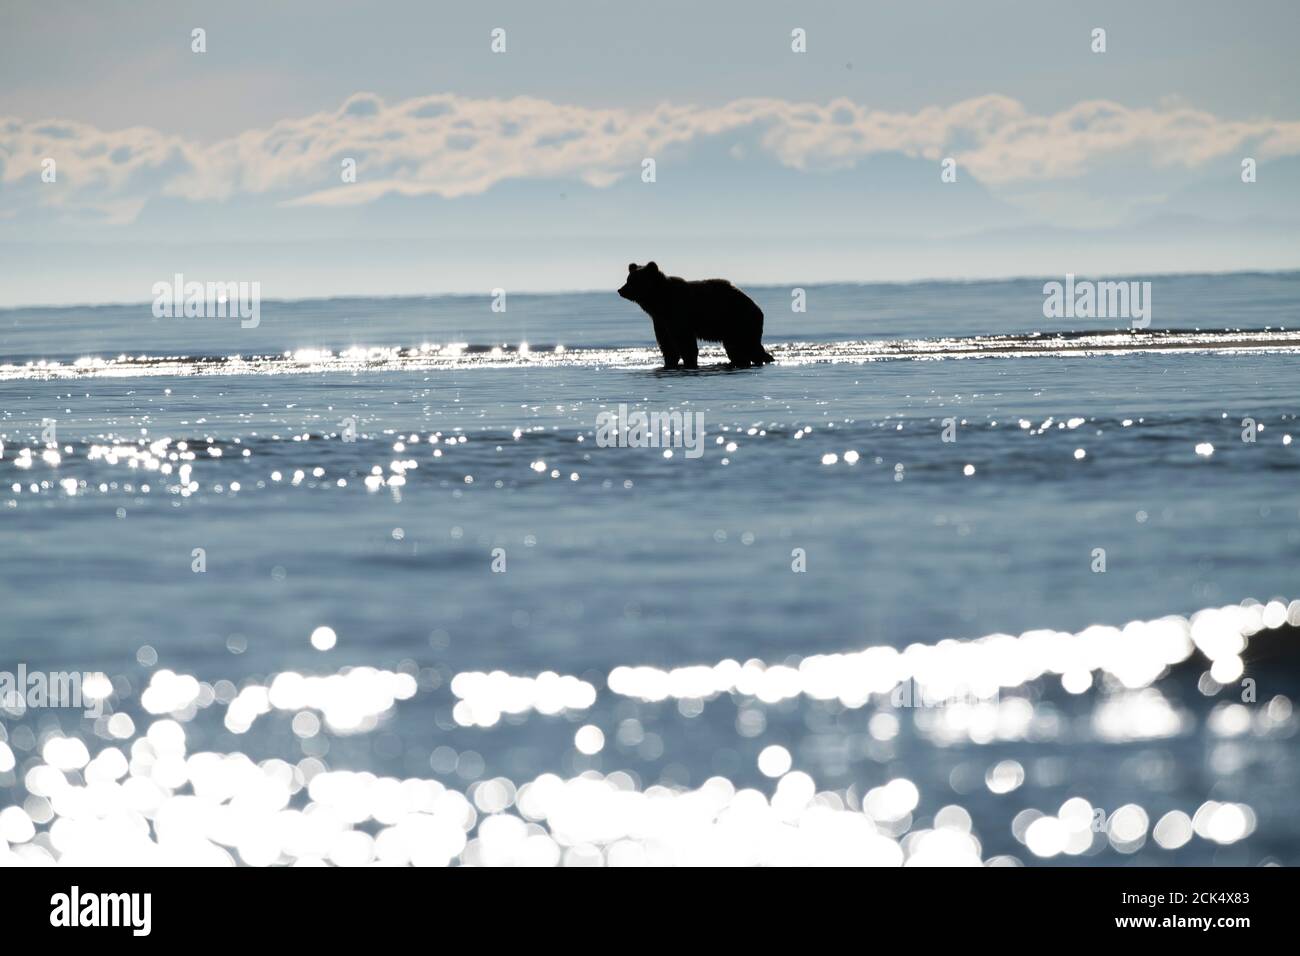 Alaskan Coastal Brown Bear, Lake Clark National Park Stock Photo